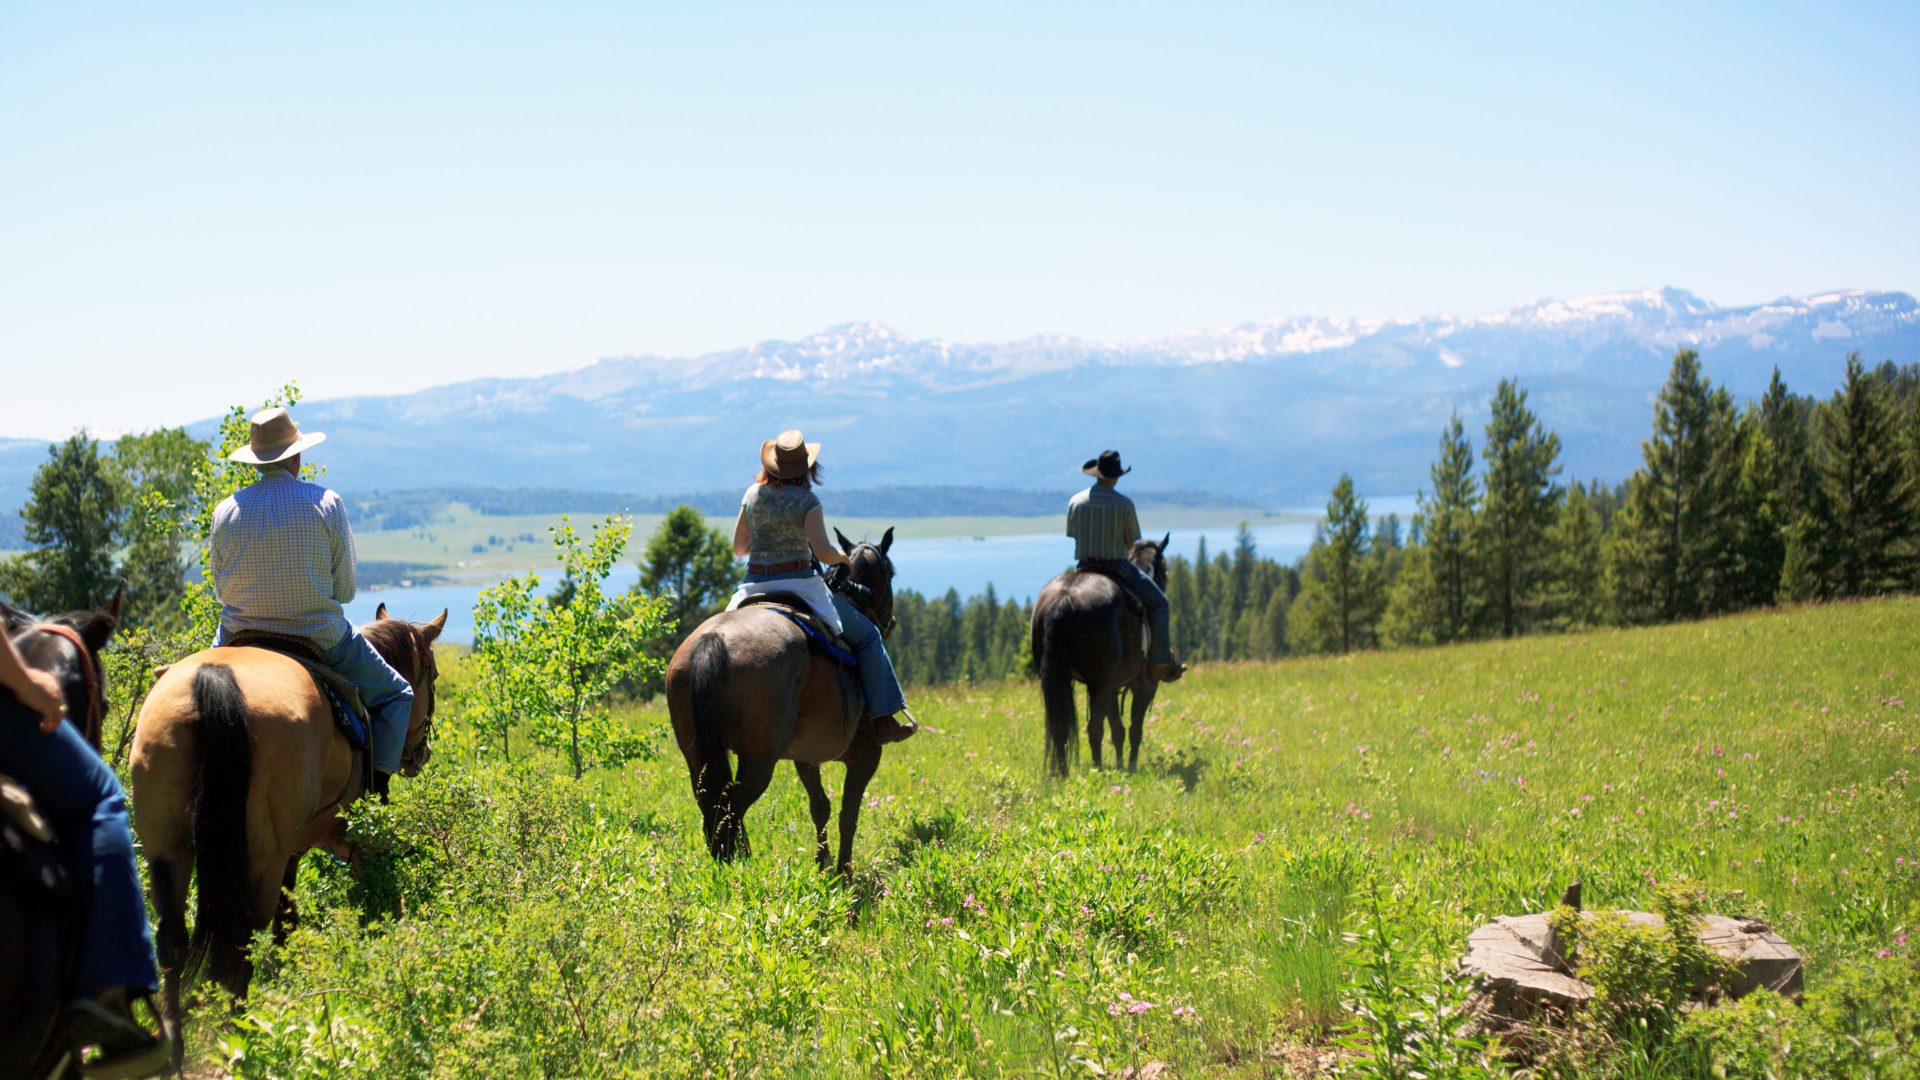 Horseback Trail Riding in America’s National Parks